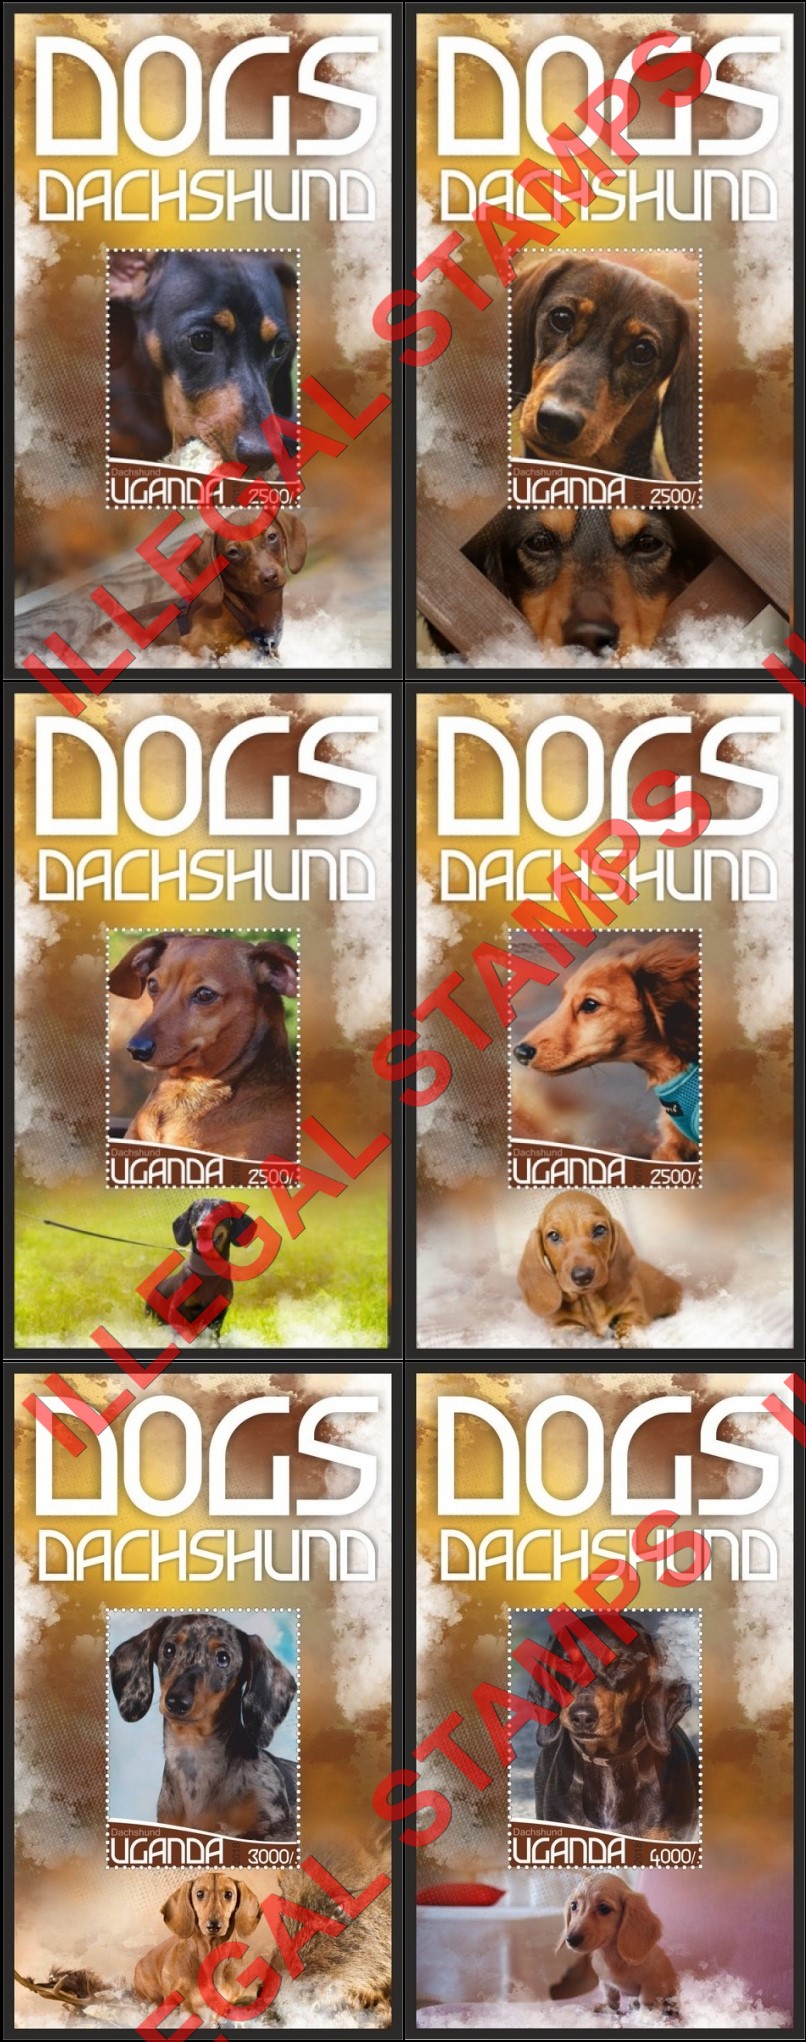 Uganda 2018 Dogs Dachshund Illegal Stamp Souvenir Sheets of 1